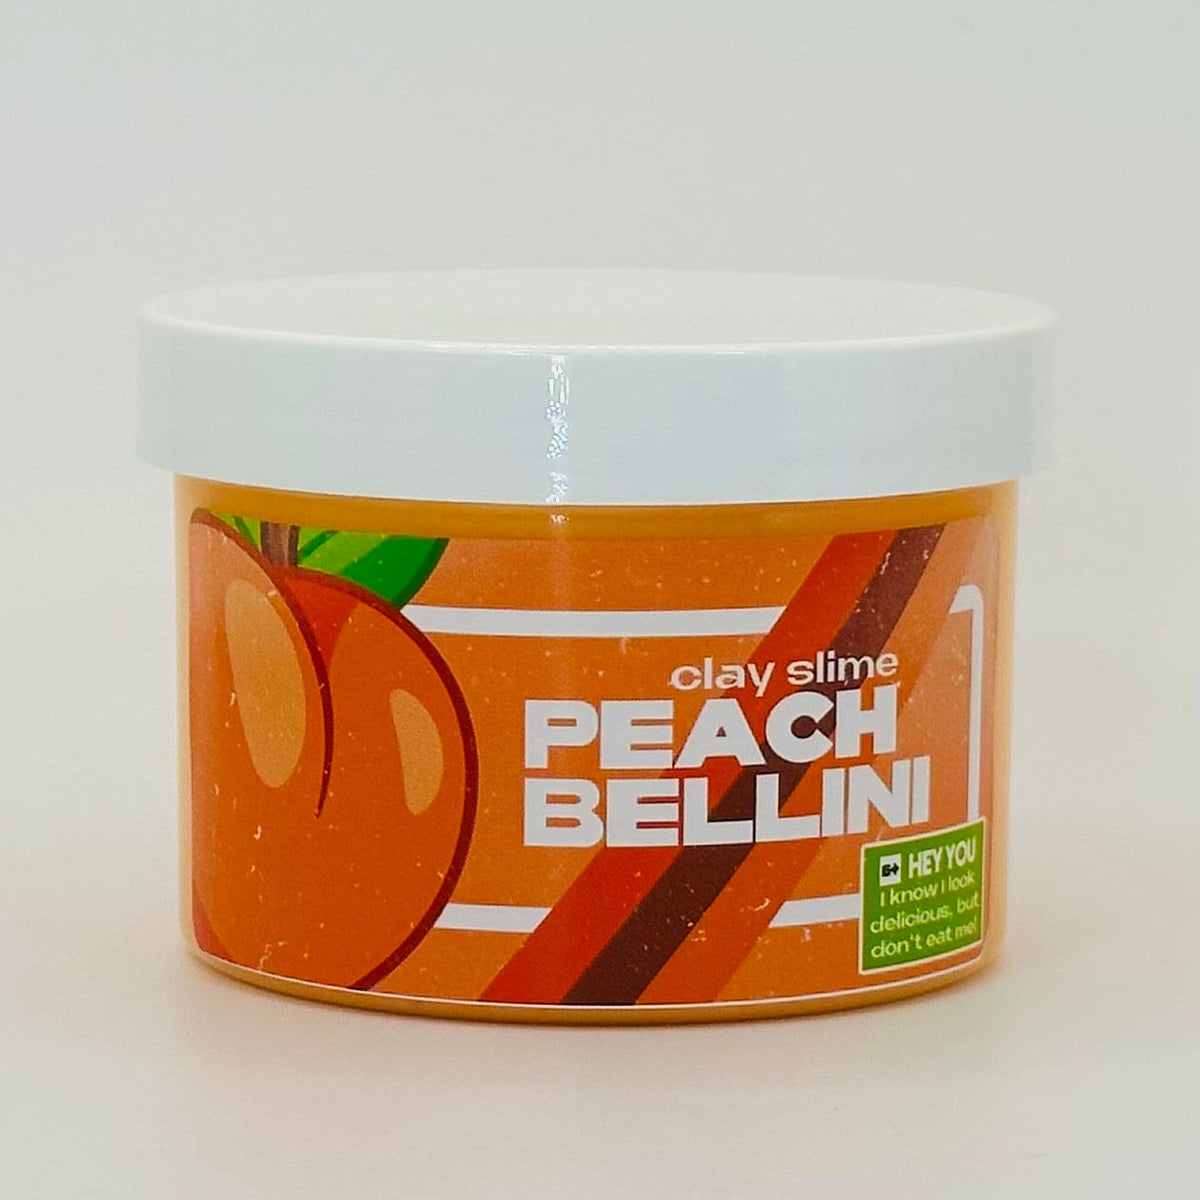 Peach Bellini Clay Slime